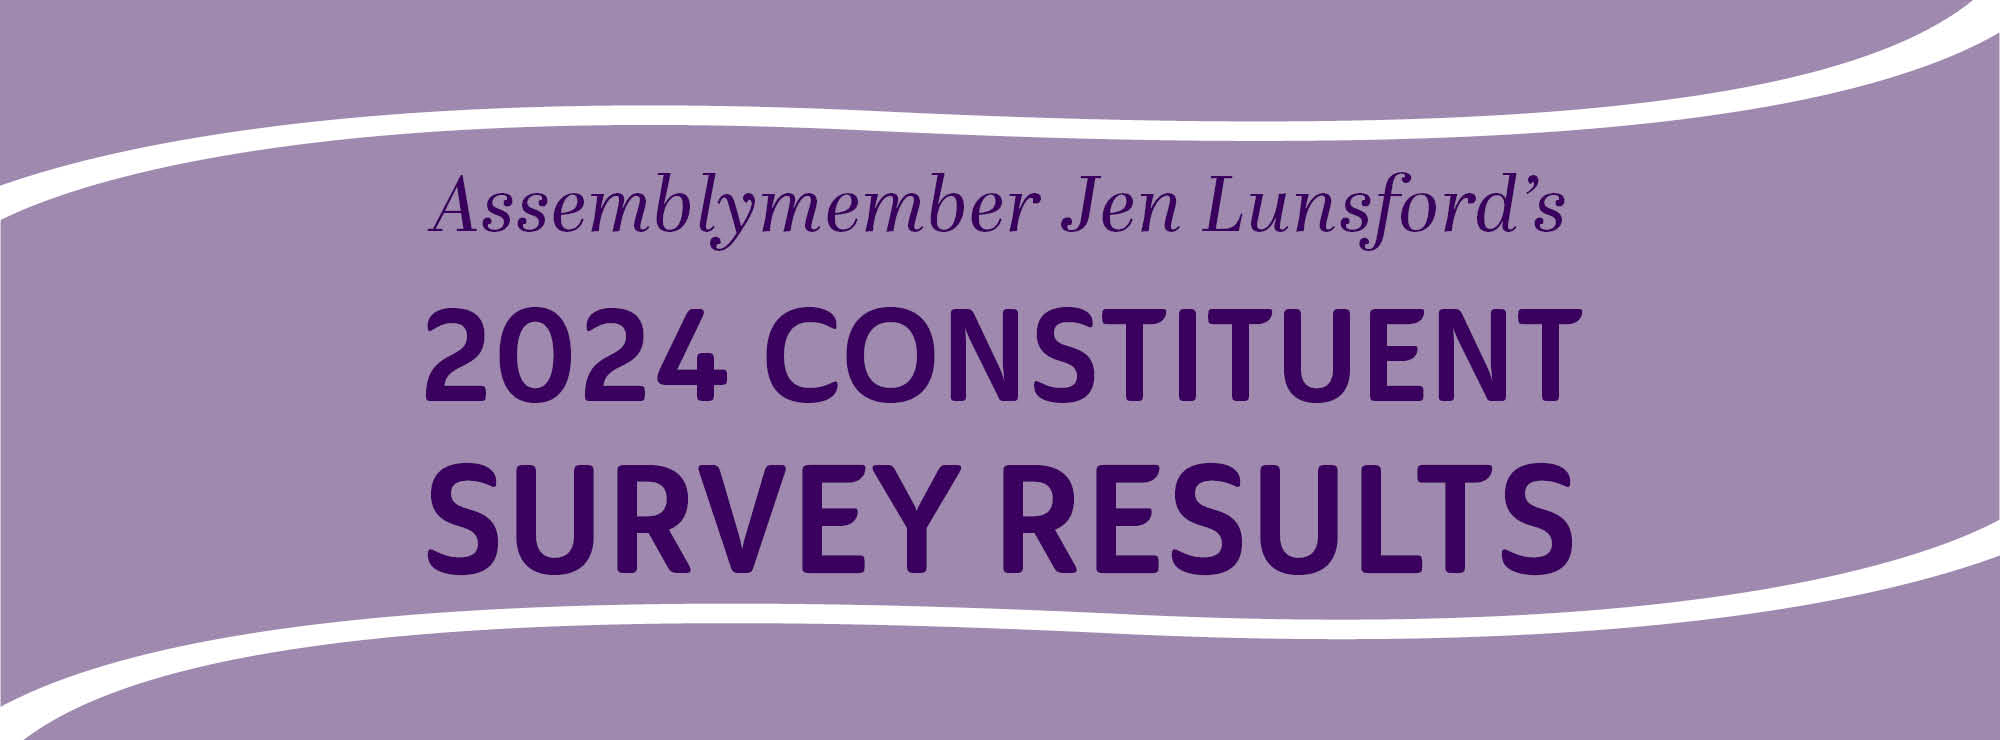 2024 Constituent Survey Results